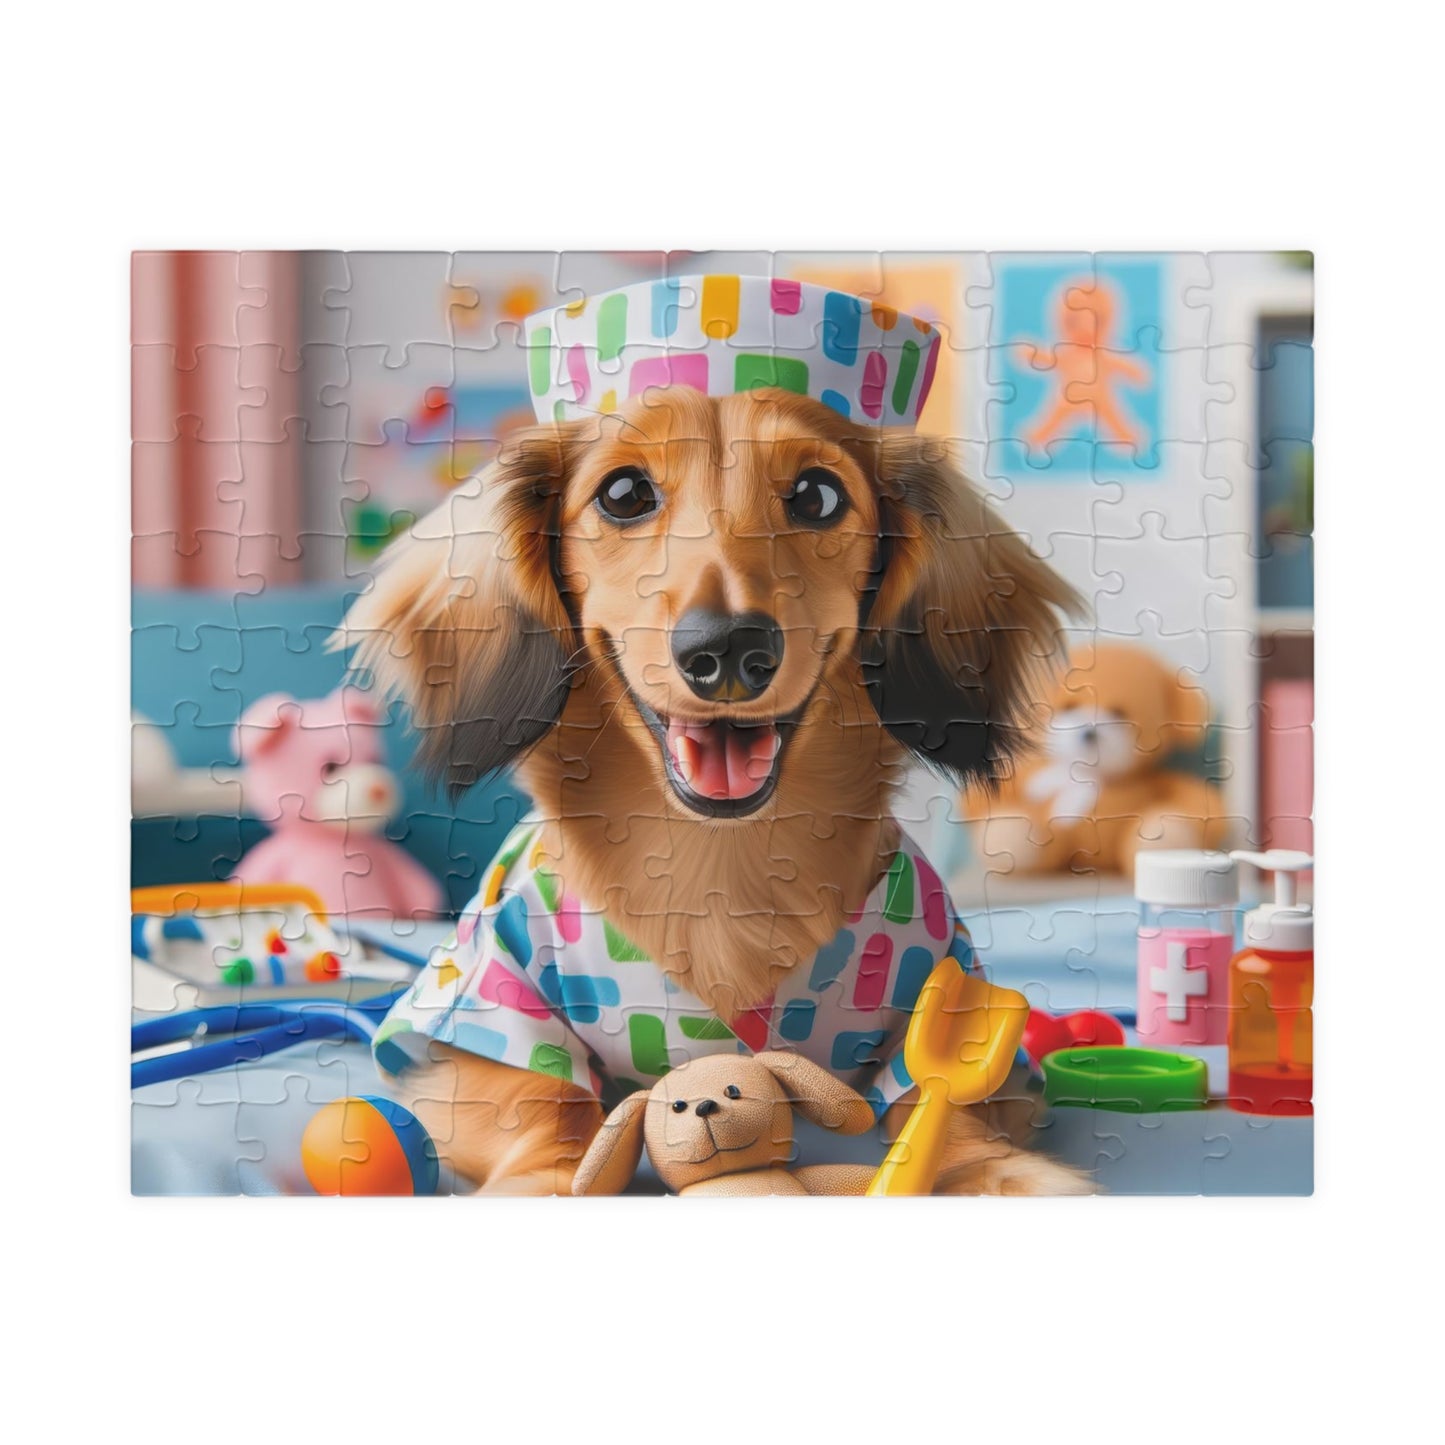 Playful Dachshund Nurse Puzzle - Colorful Jigsaw, Family Bonding Activity, Glossy Finish, Educational Dog Game, 110, 252, 520, 1014-pieces